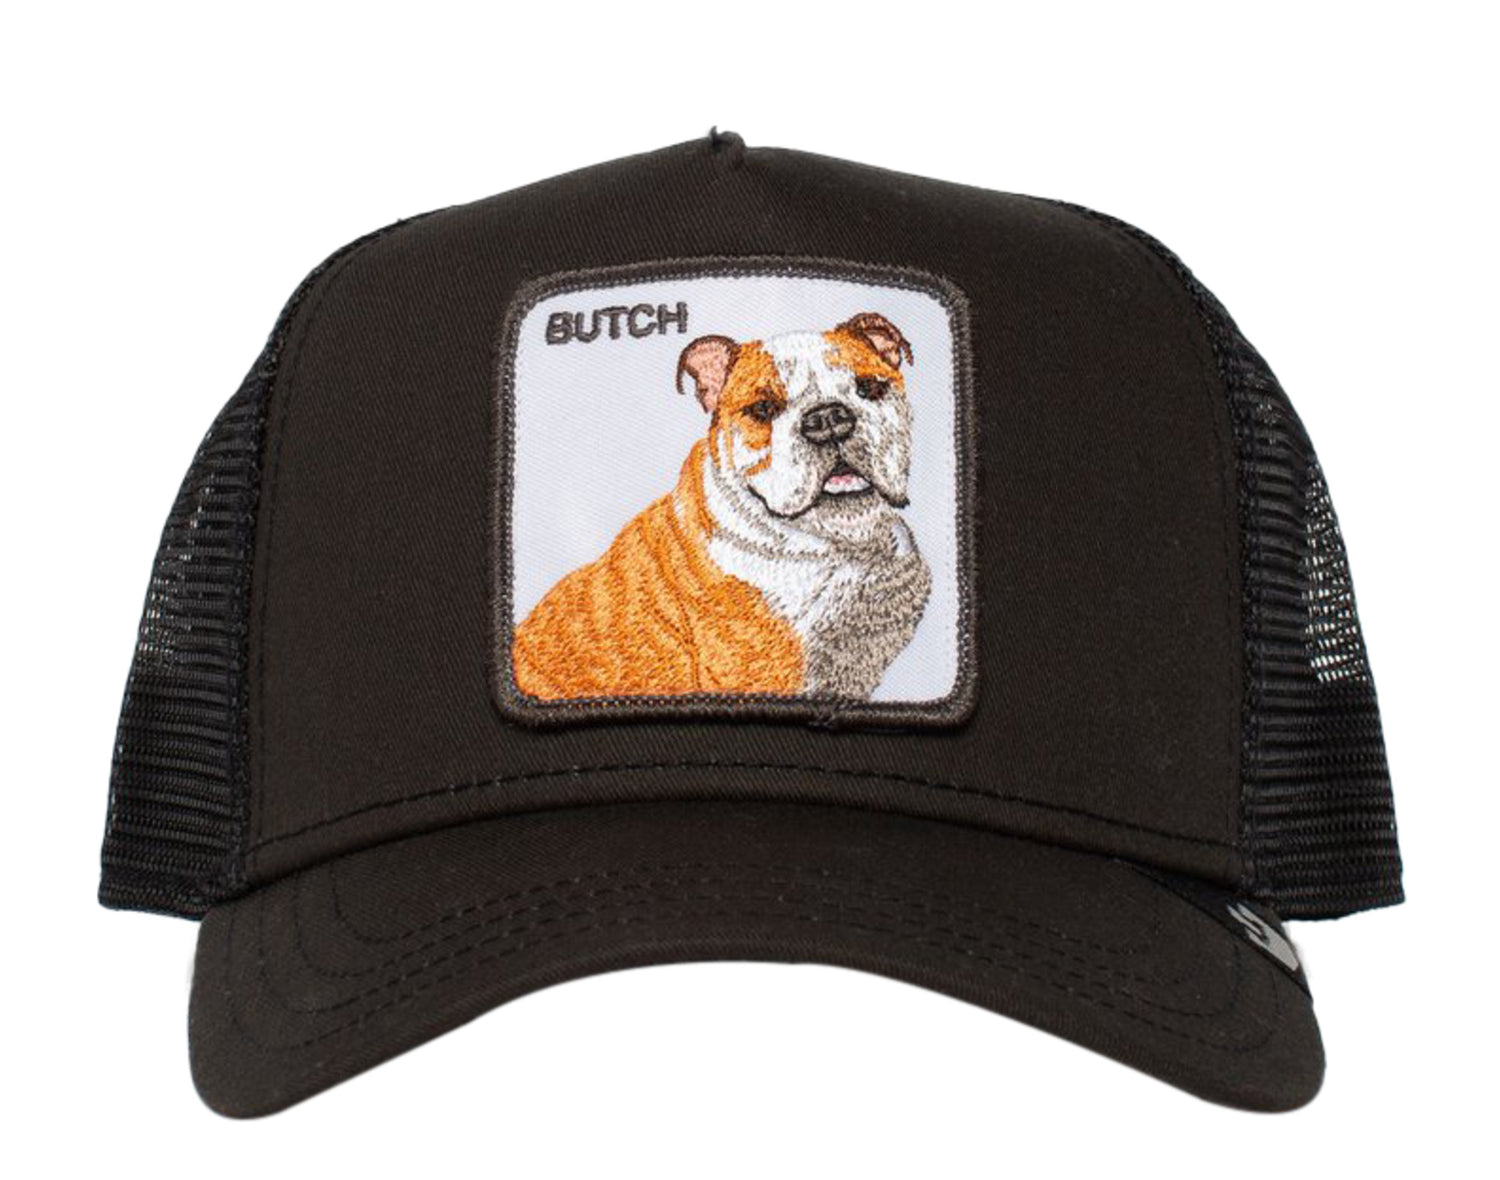 Goorin Bros - The Farm - Butch Bulldog Trucker Hat